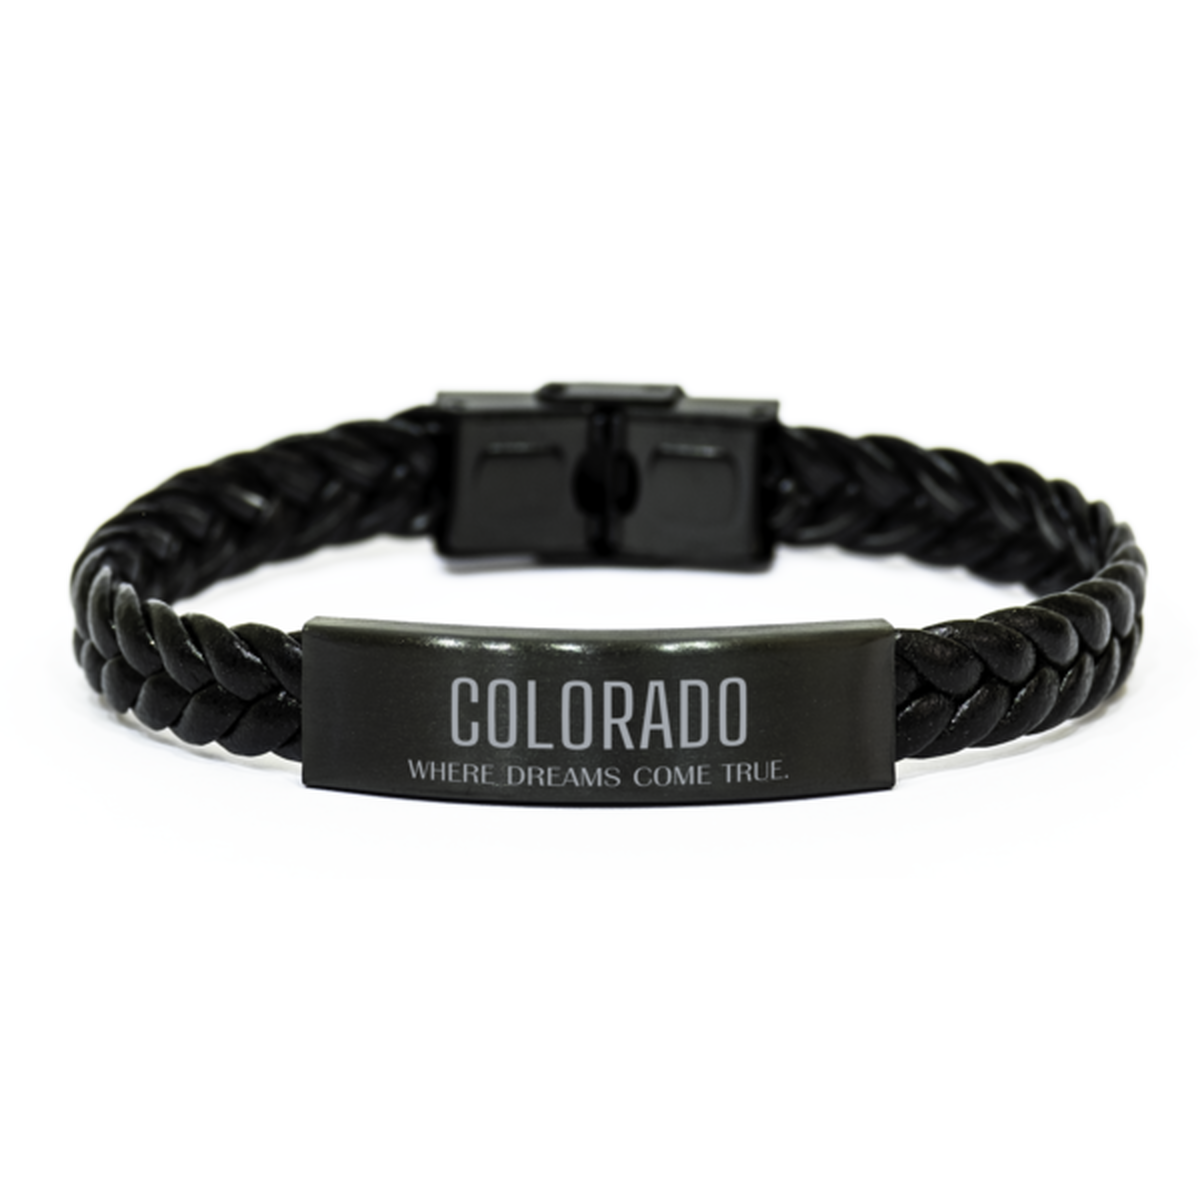 Love Colorado State Braided Leather Bracelet, Colorado Where dreams come true, Birthday Inspirational Gifts For Colorado Men, Women, Friends